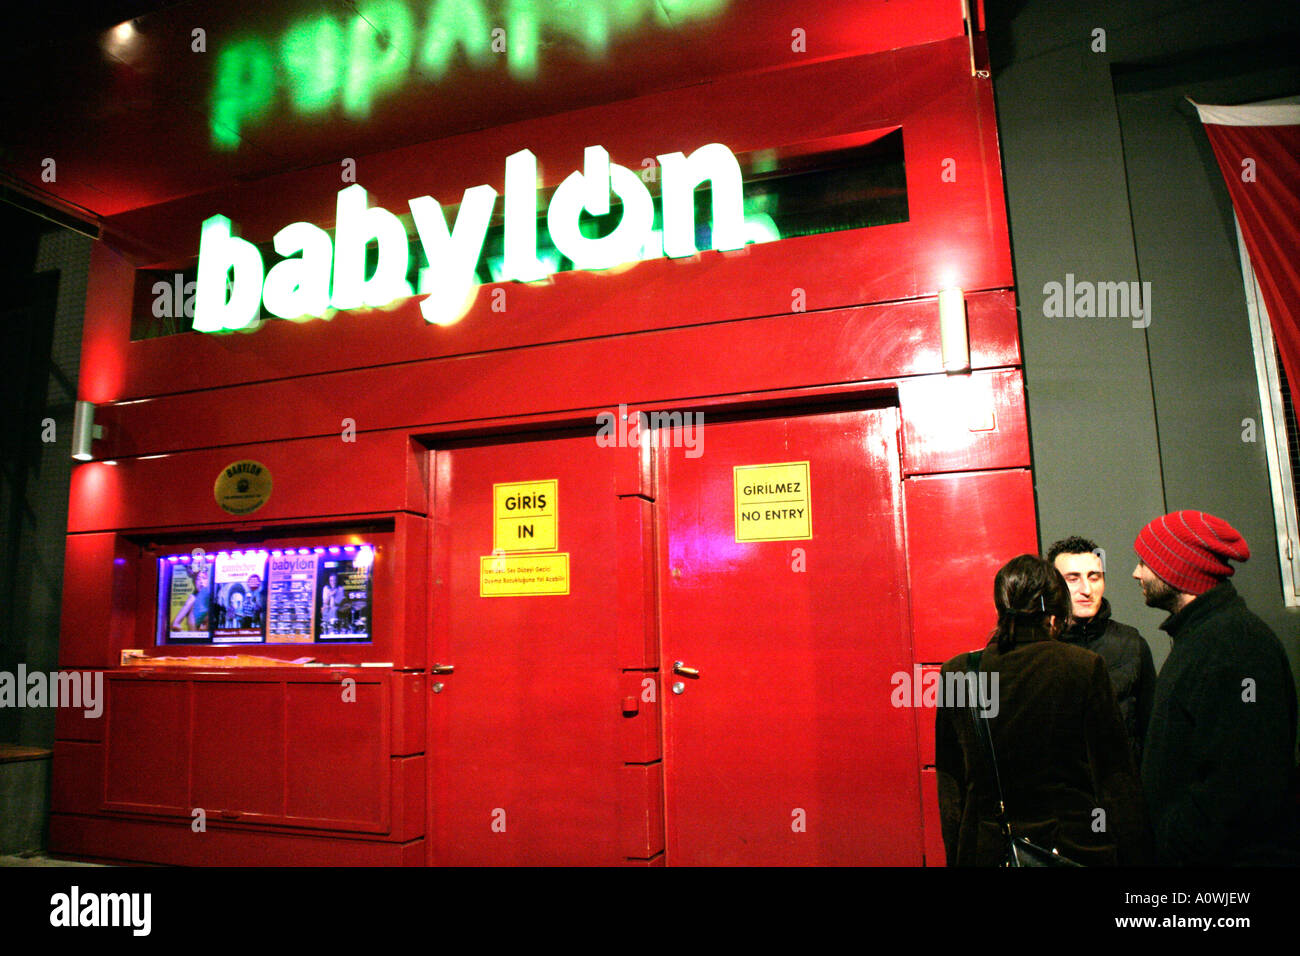 BABYLON MUSIC VENUE, BEYOGLU, ISTANBUL, TURKEY Stock Photo